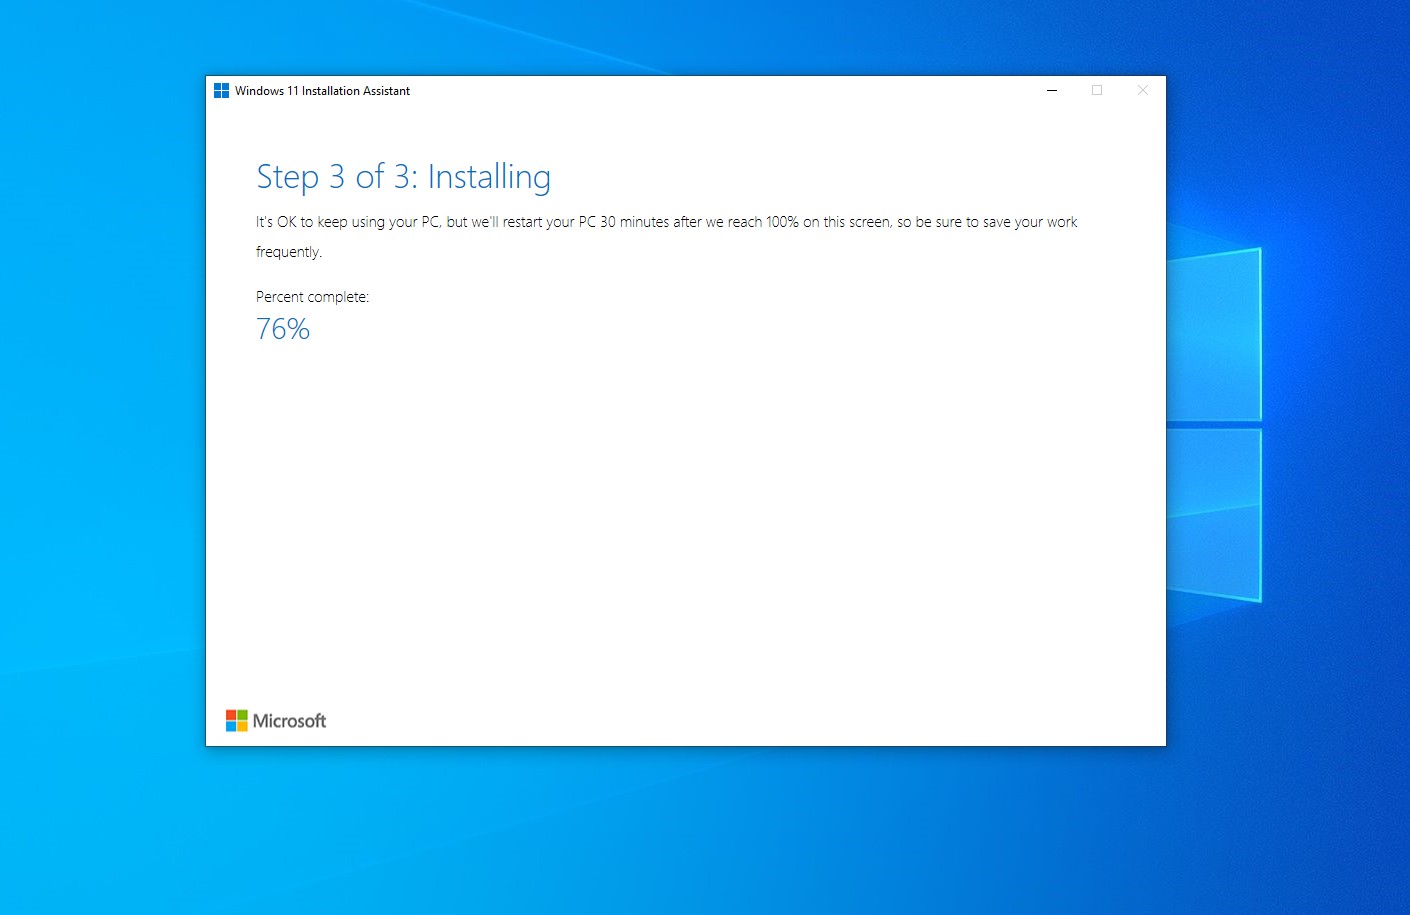 Step 3 of installing Windows 11.